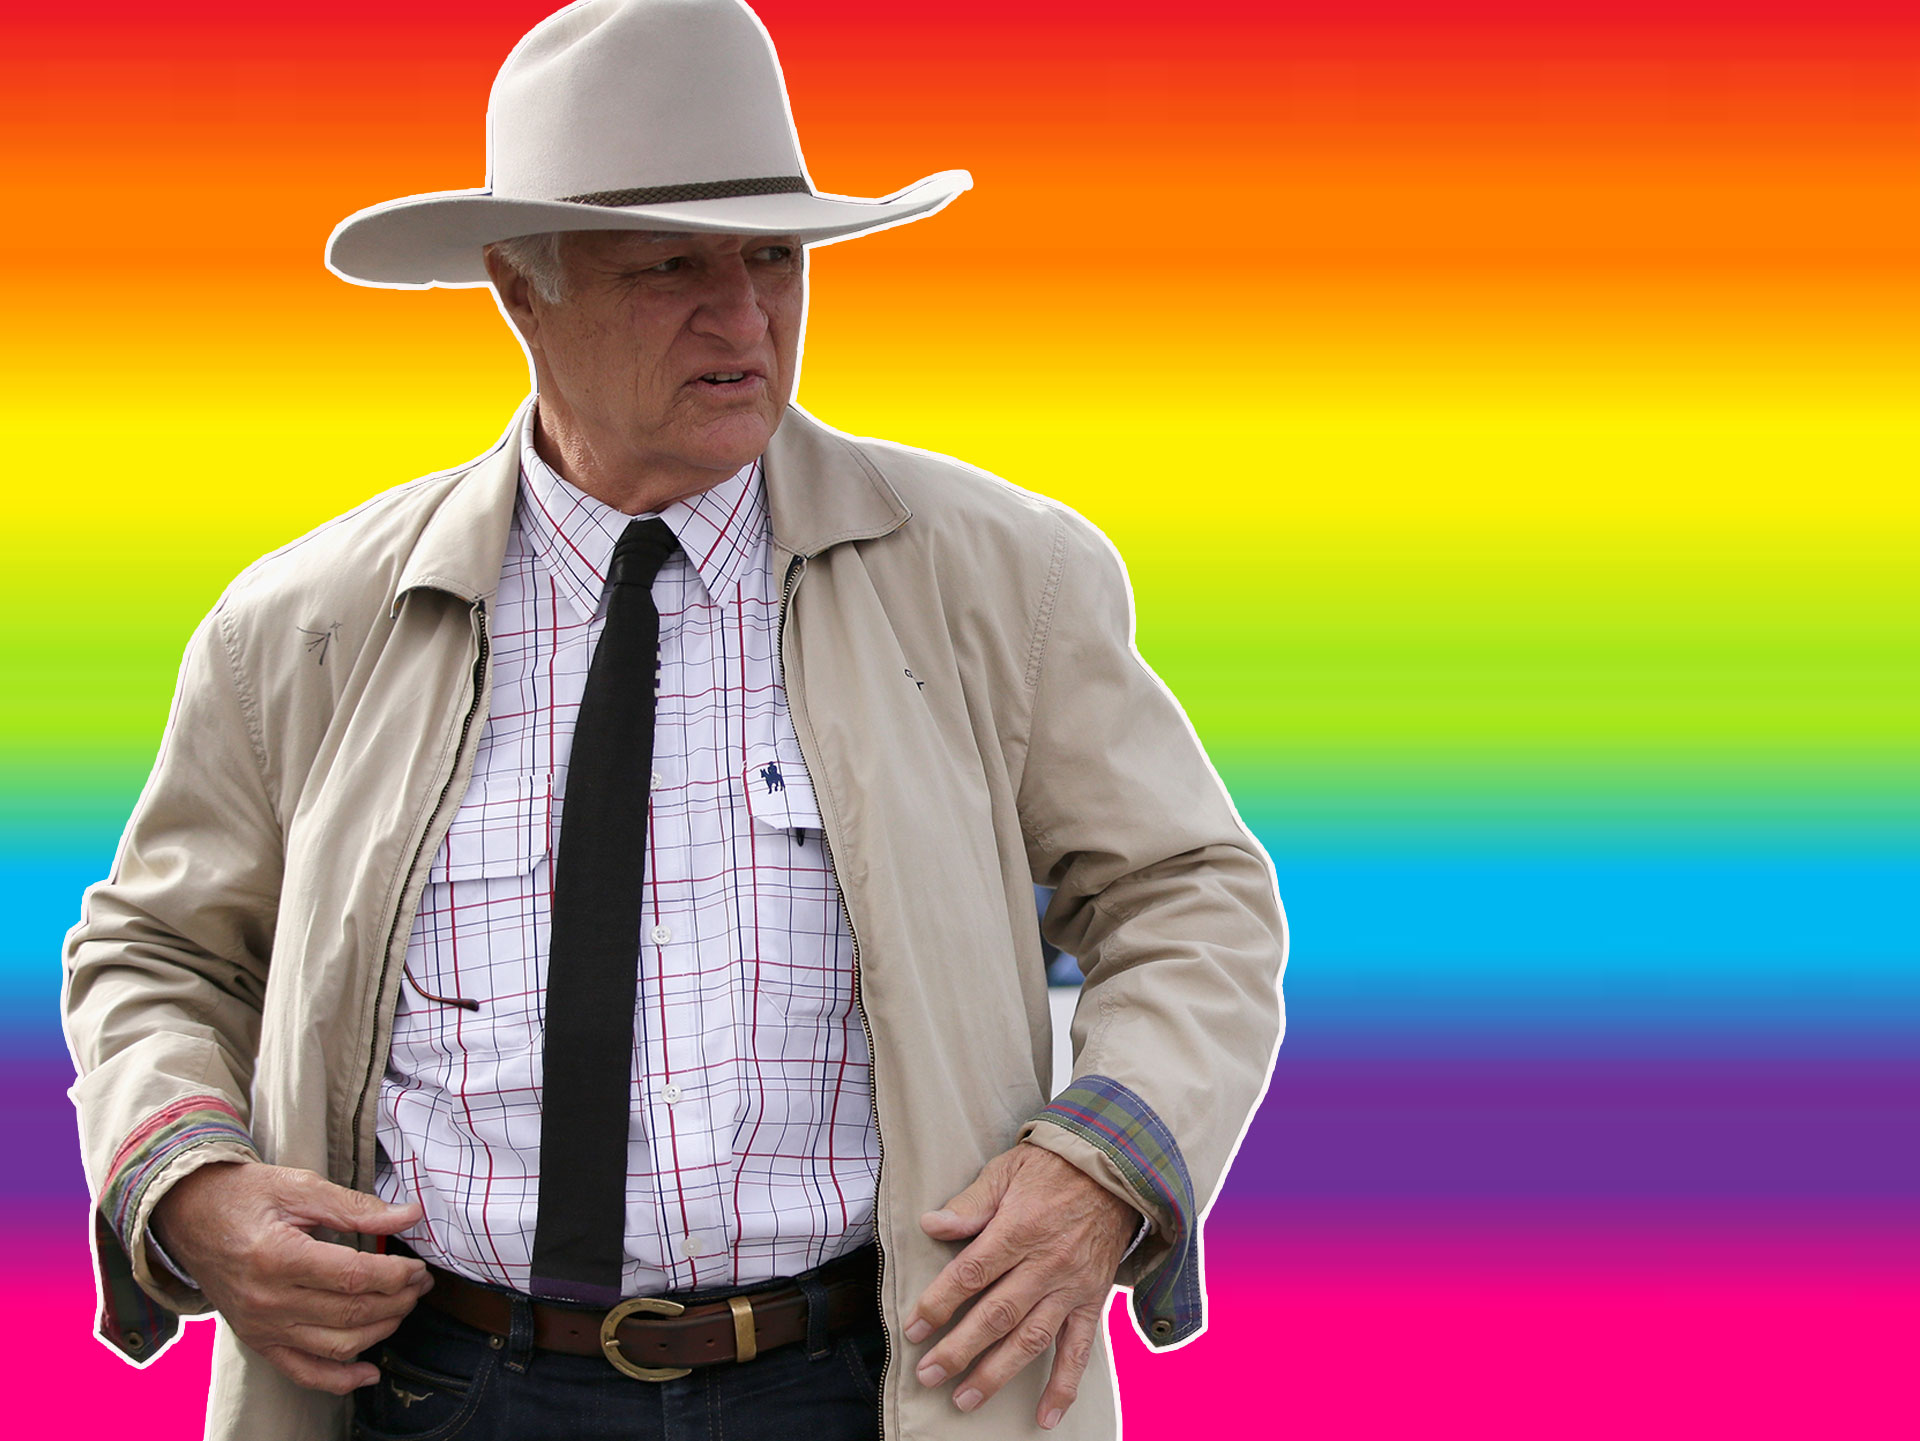 Bob Katter's furious at homosexuals for stealing gay